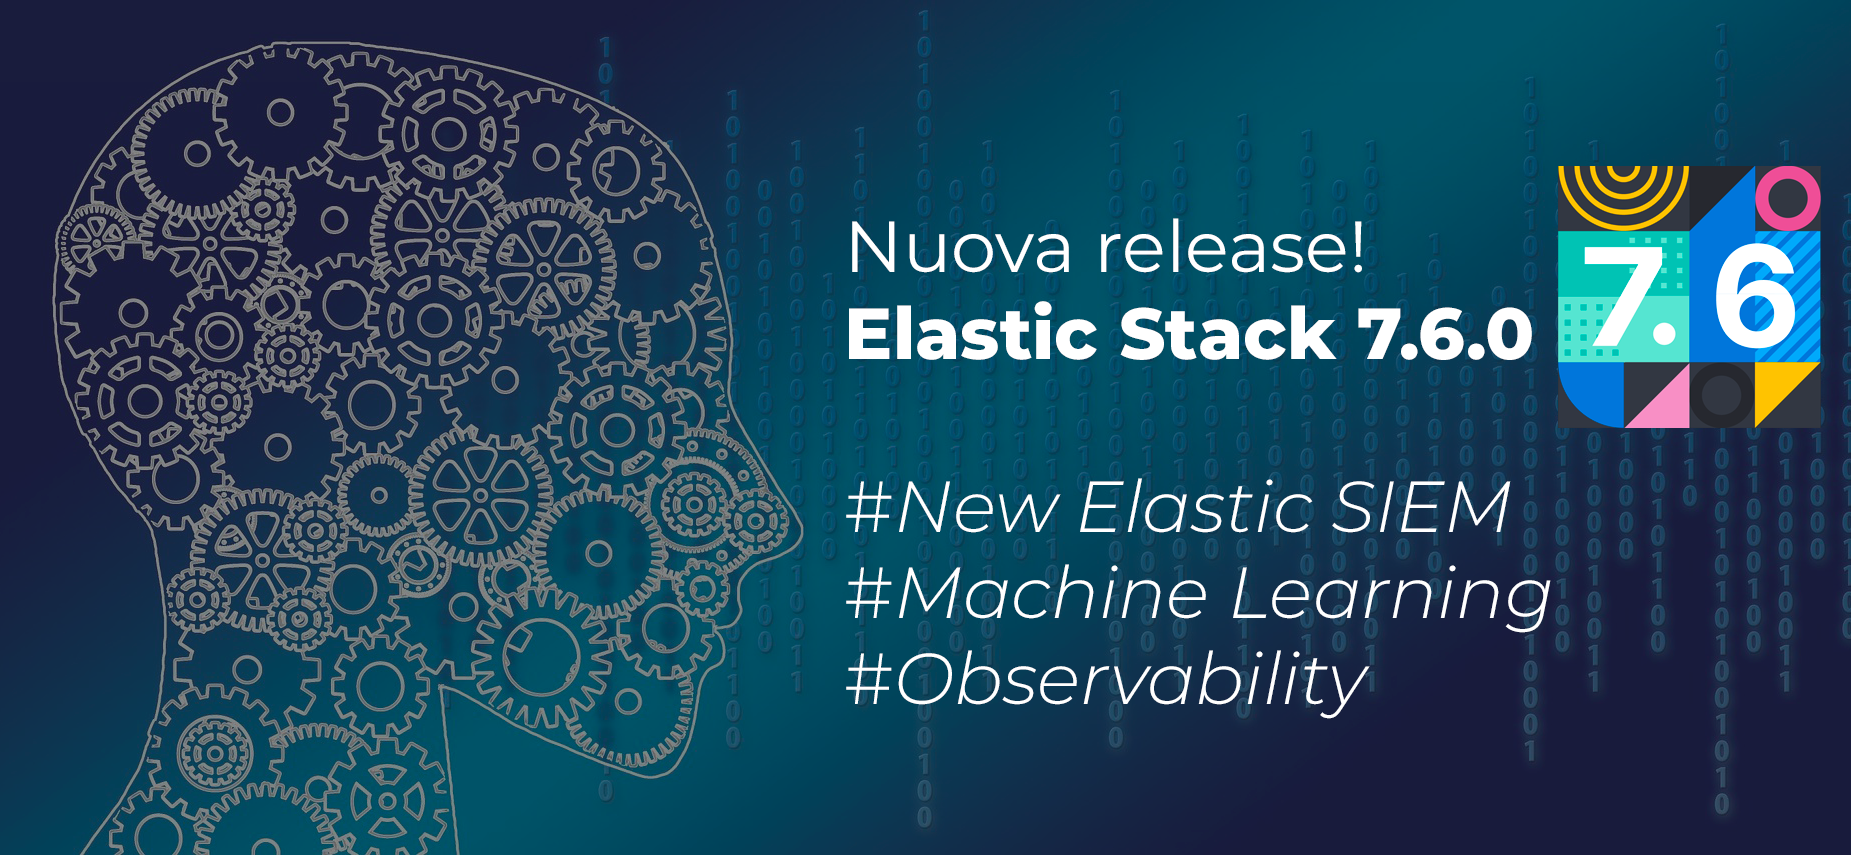 Elastic Stack 7.6.0: sicurezza, observability e machine learning